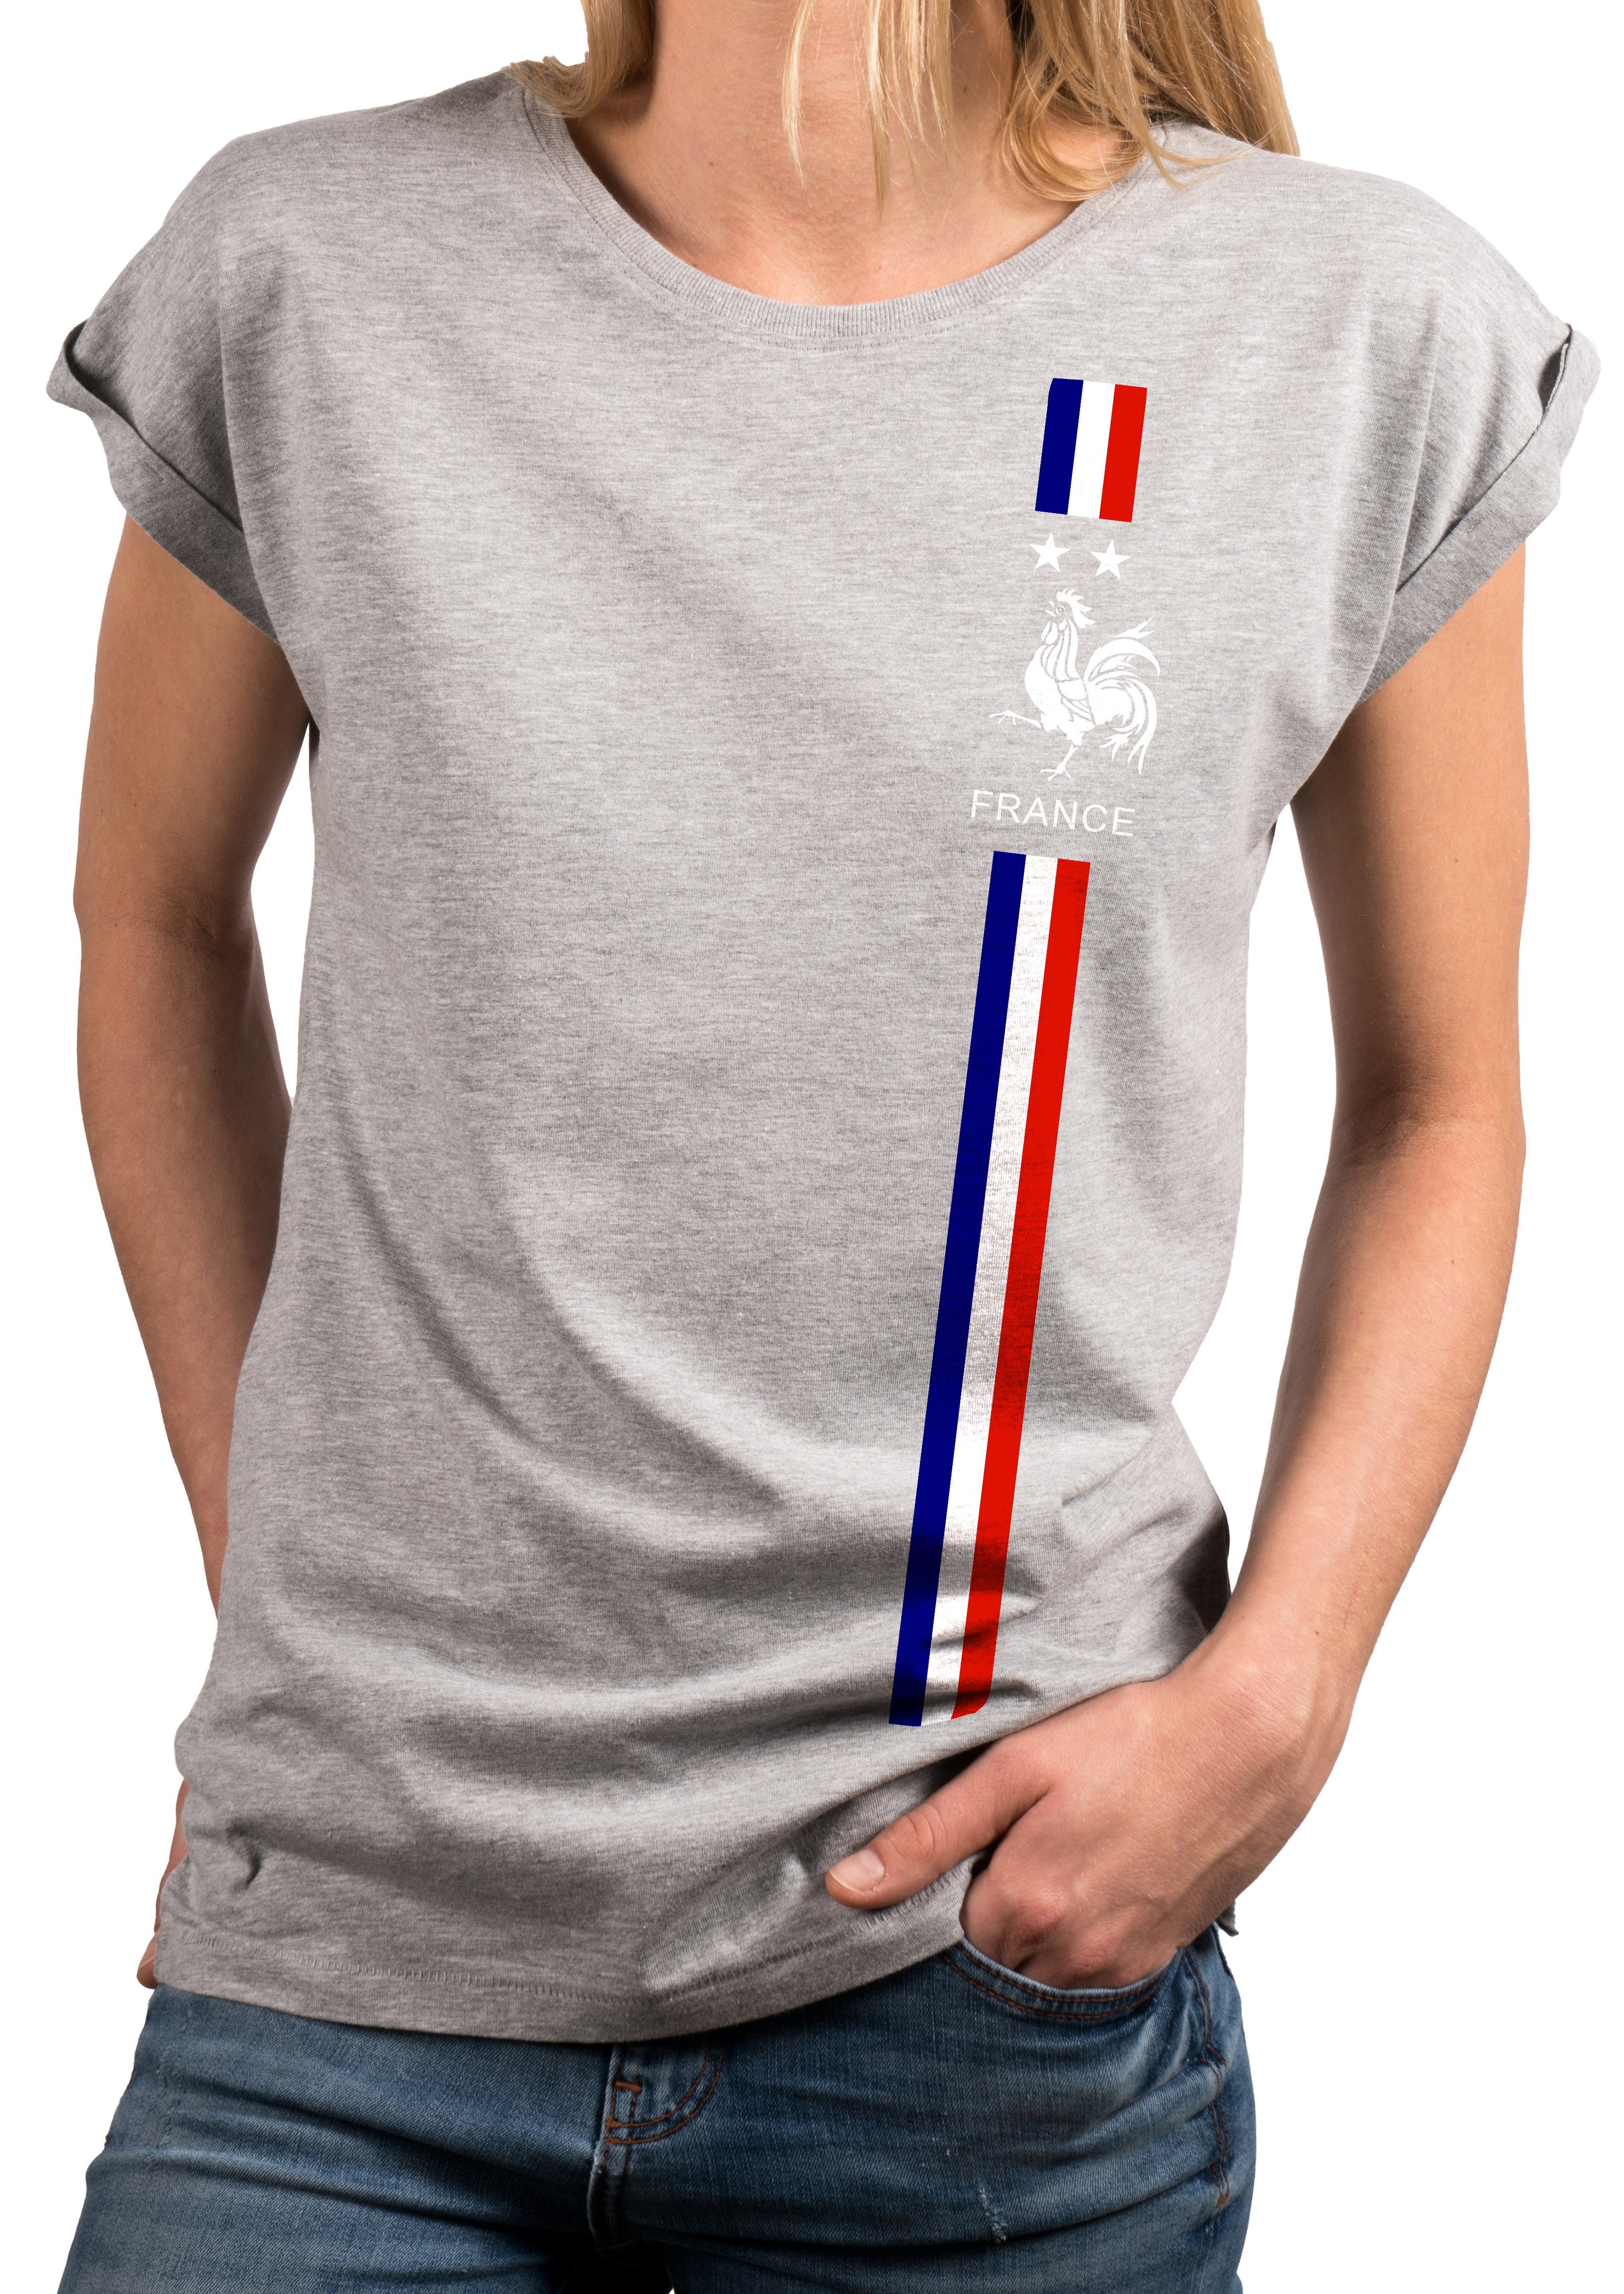 MAKAYA Print-Shirt Damen Kurzarmshirt Baumwolle Frankreich Fahne Flagge Trikot Top Tunika, große Größen Hellgrau